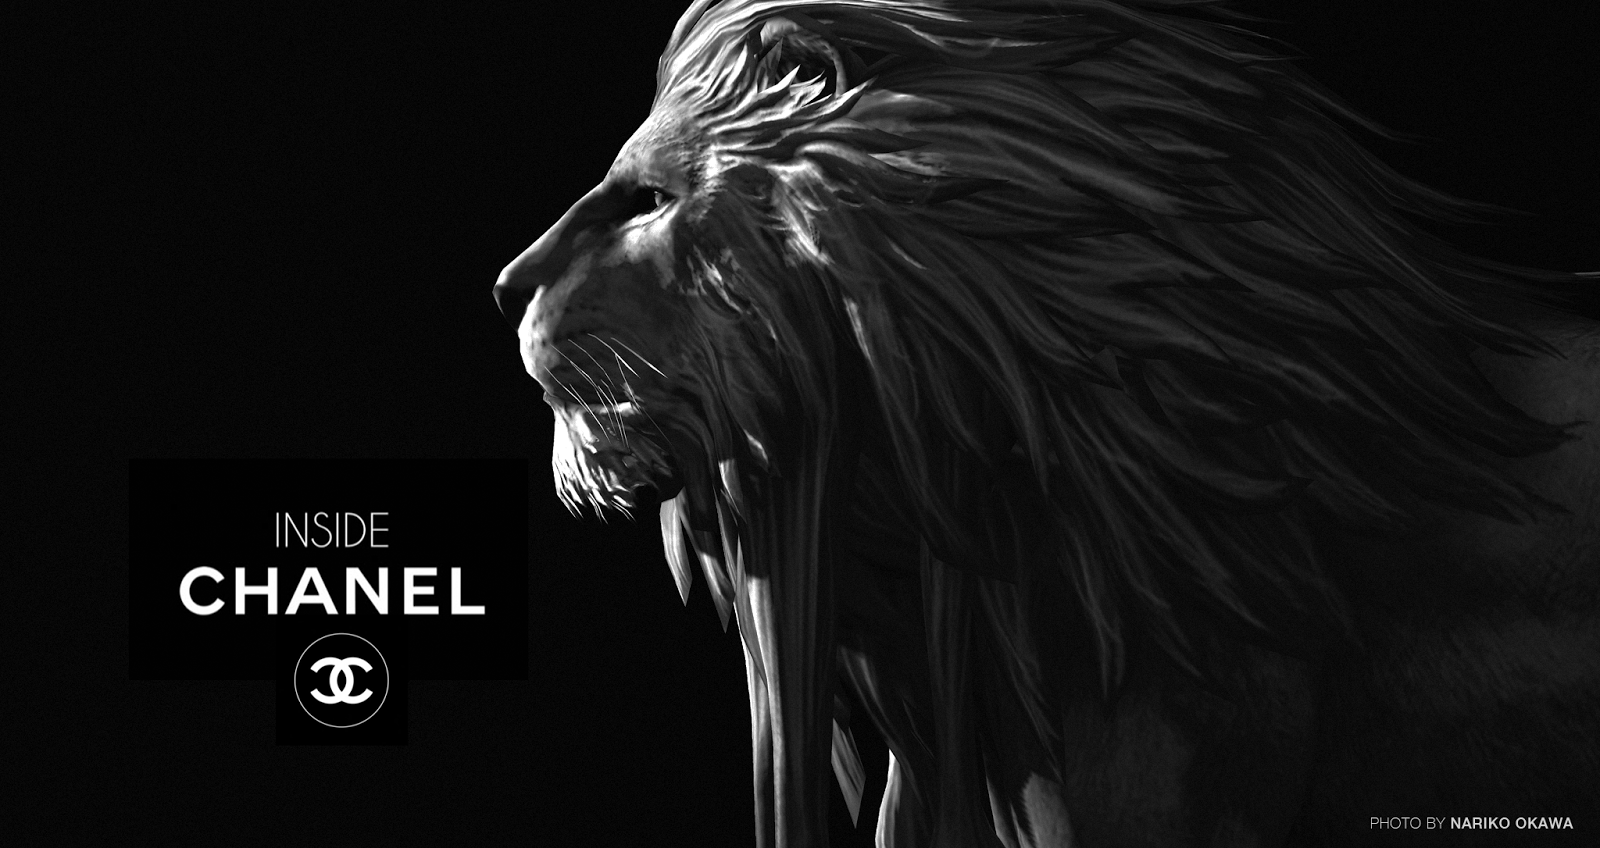 Nariko Okawa: Inside Chanel - The Lion